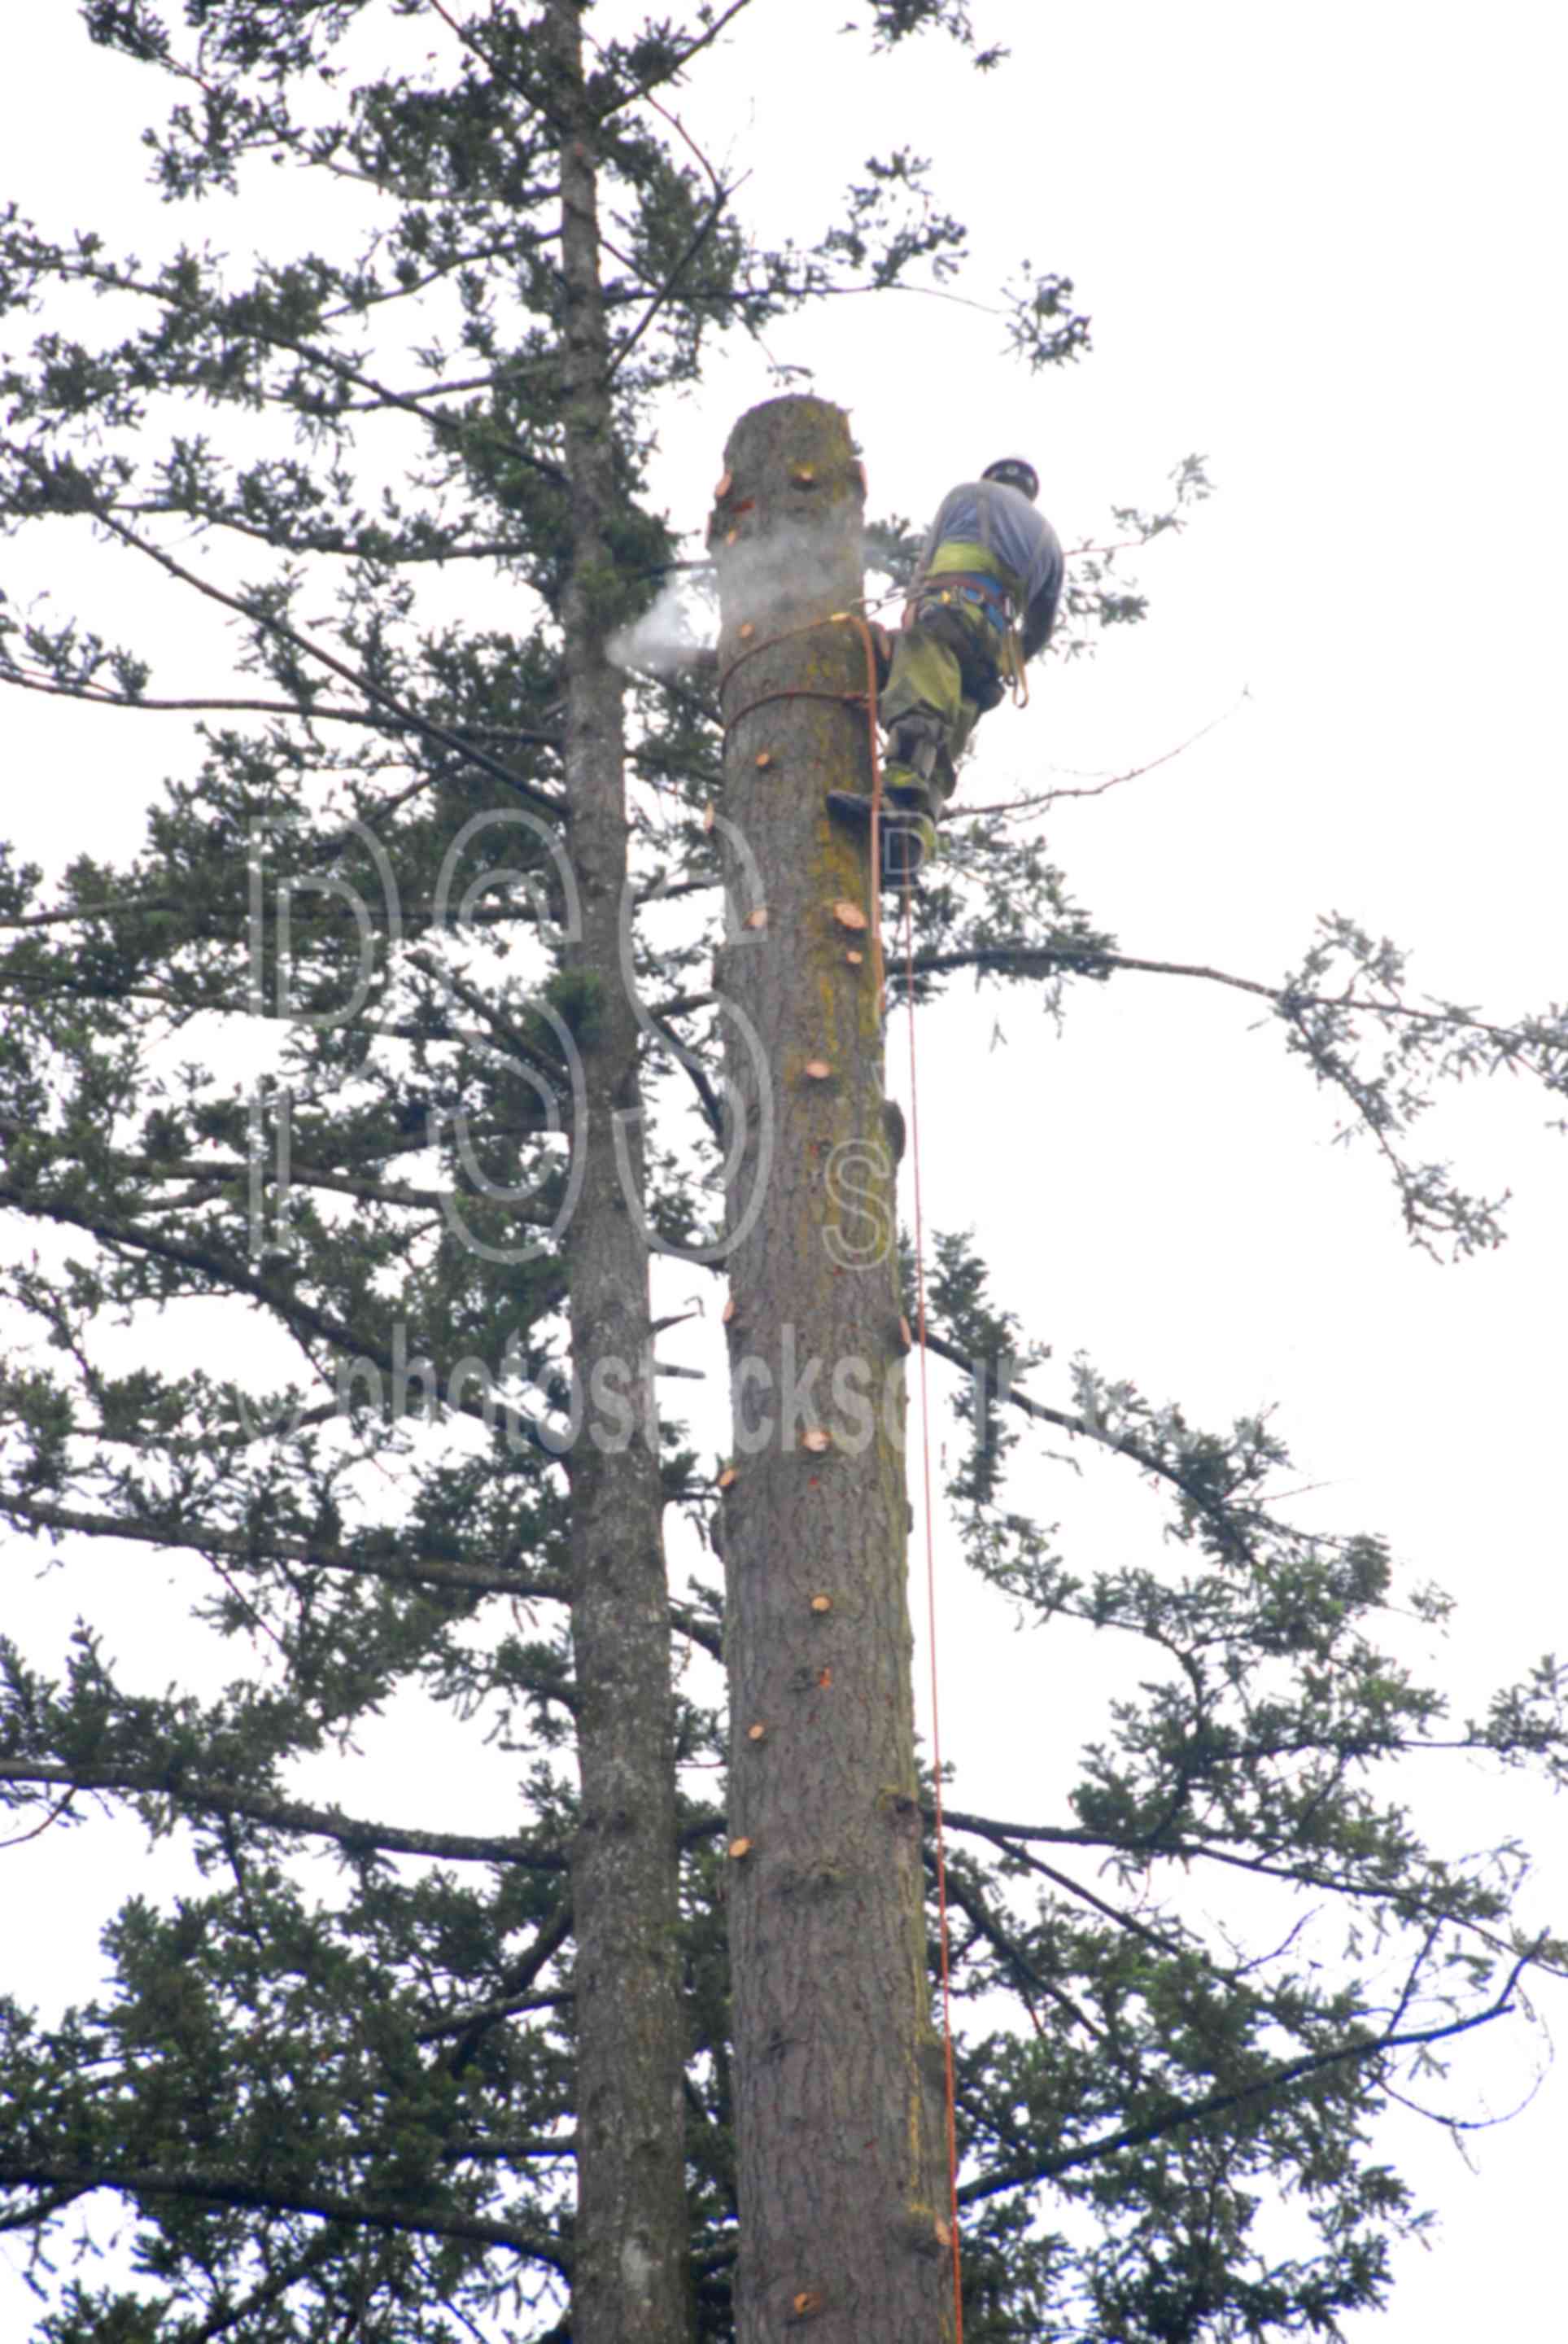 High Climber,climber,logger,work,working,worker,hard hat,chain saw,tree,logging,rope,dangerous,risk,high risk,risky,limb,tree limbs